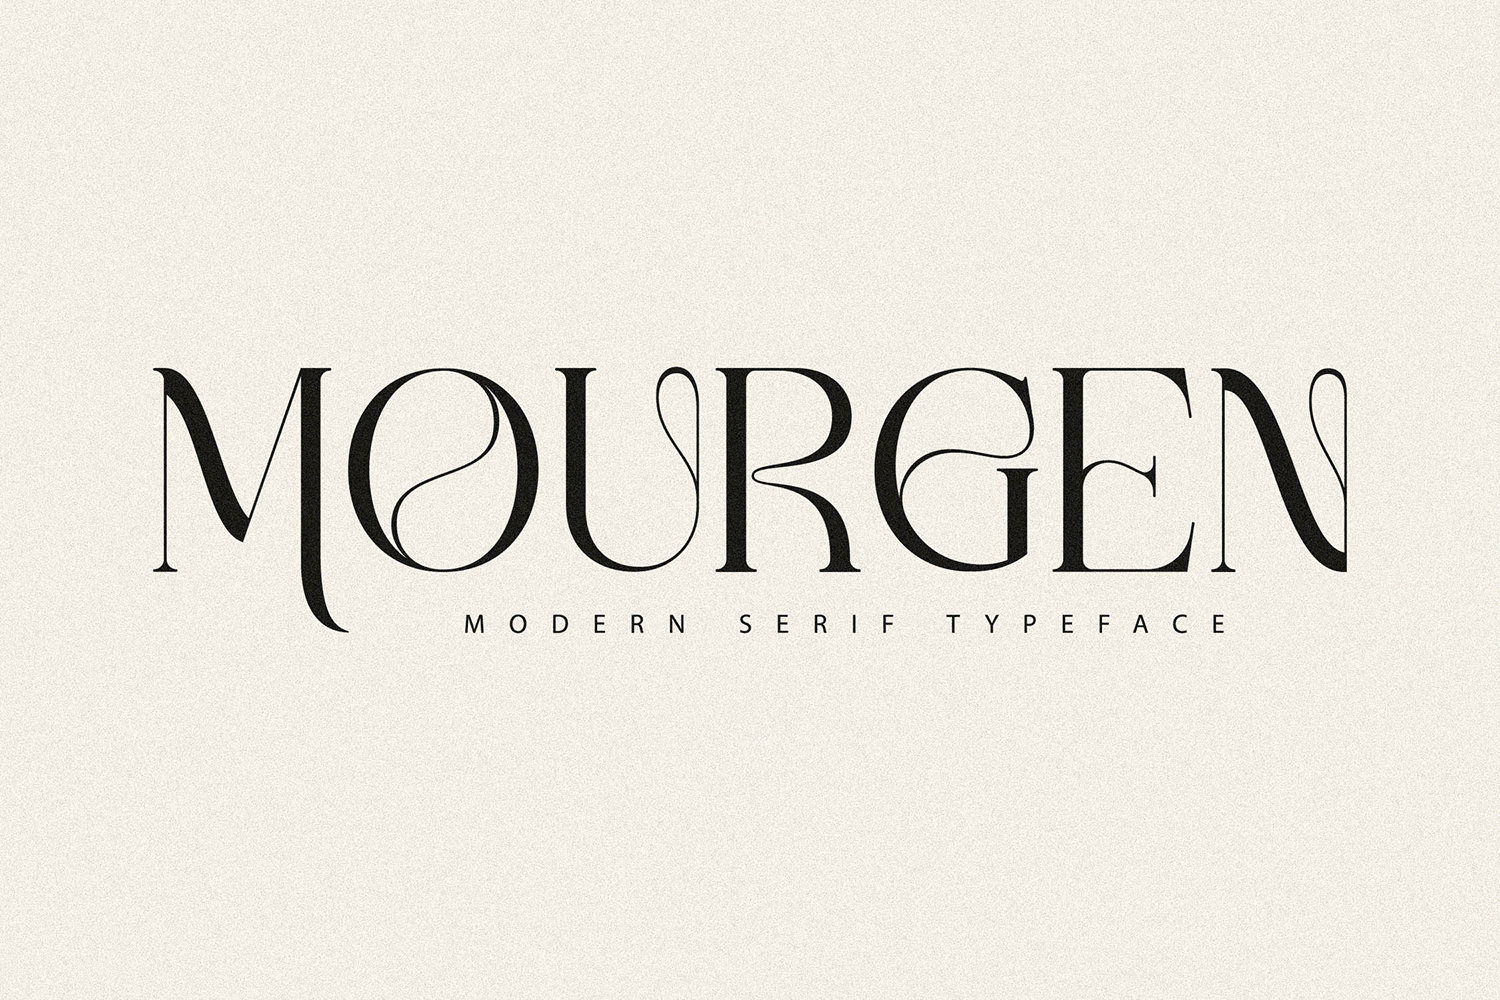 Mourgen Free Font